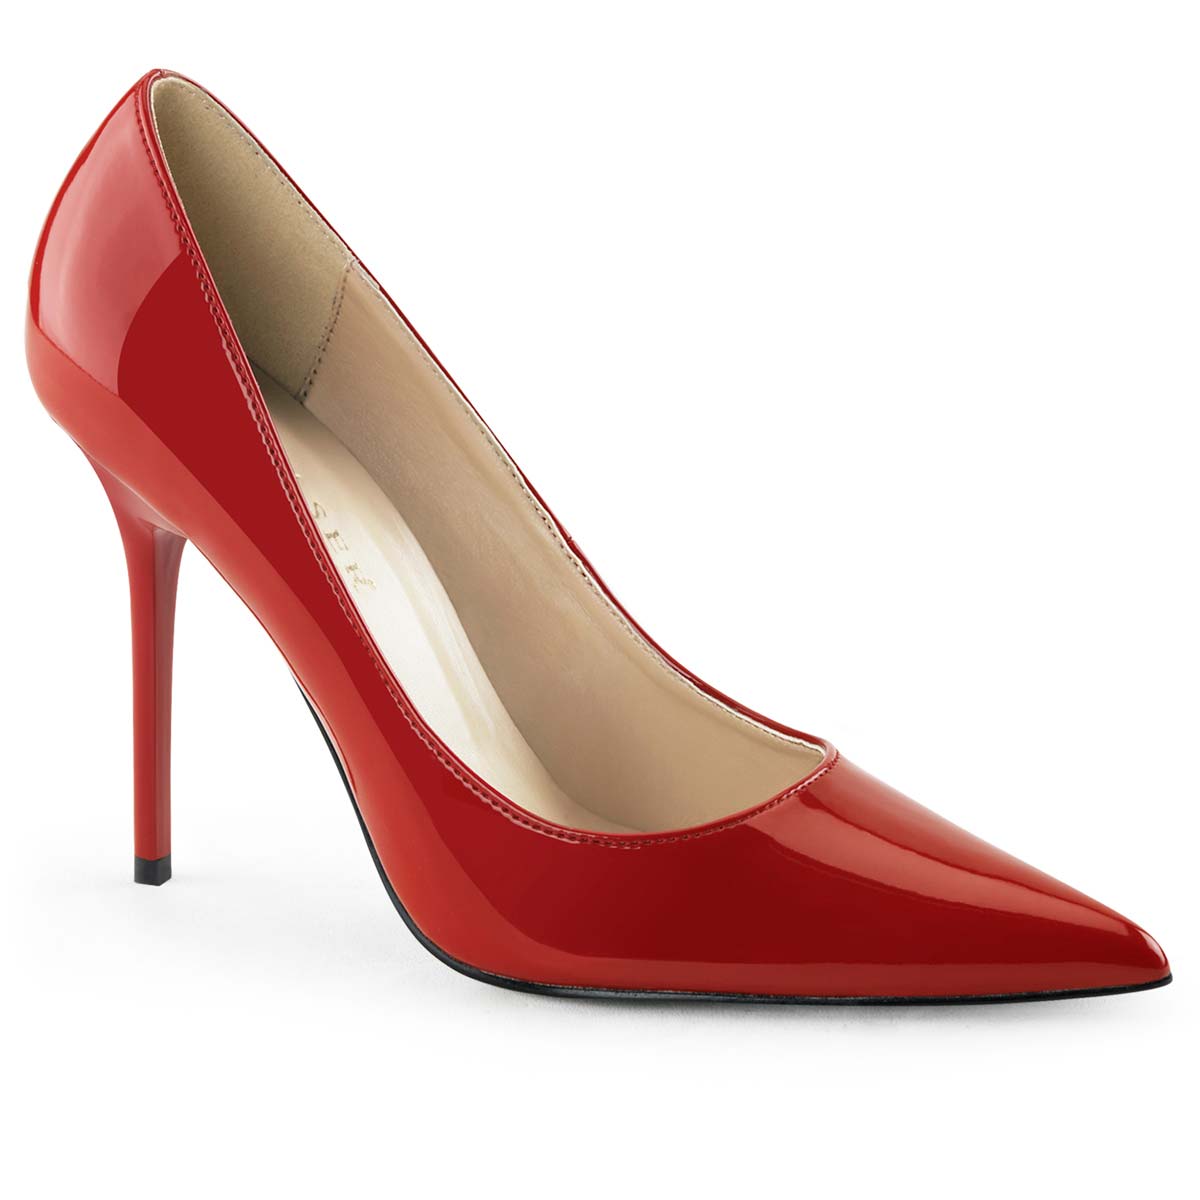 Pleaser CLASSIQUE-20 - Red Patent in Sexy Heels & Platforms - $53.95